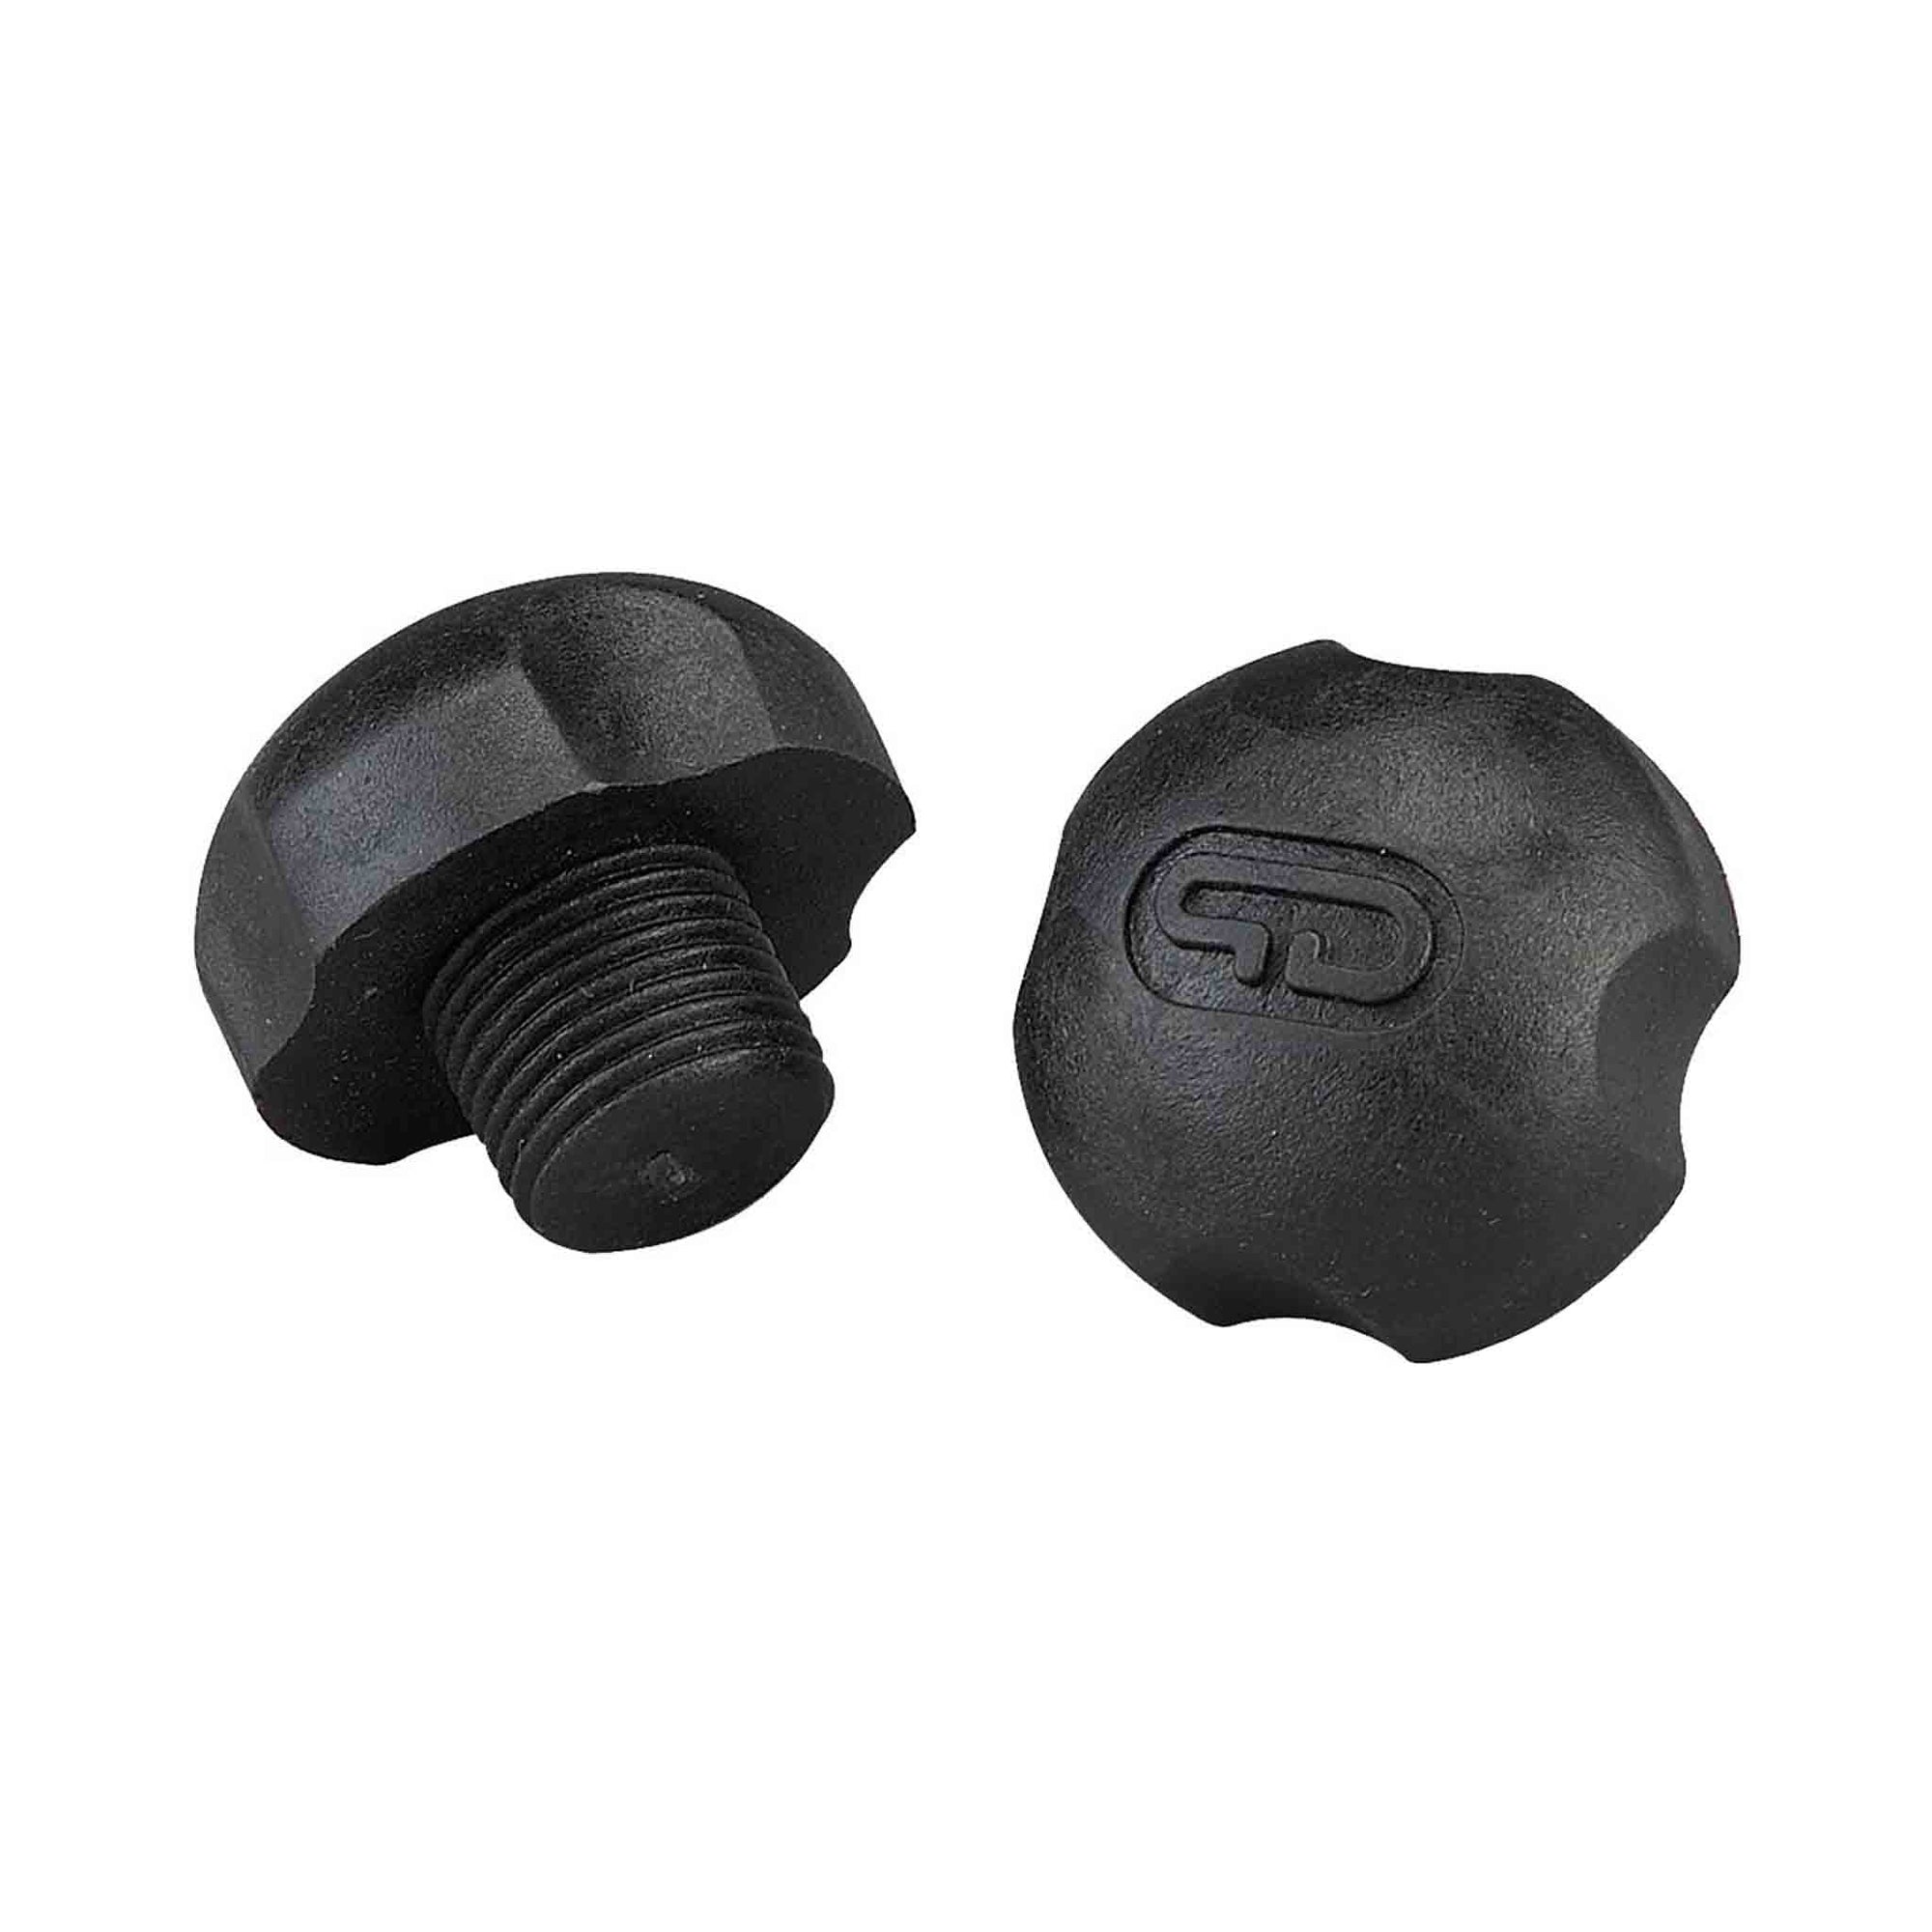 Jam Plugs 5/8" Black (Pair) - Powerdyne - Roller Skates Parts and Accessories | JT Skate